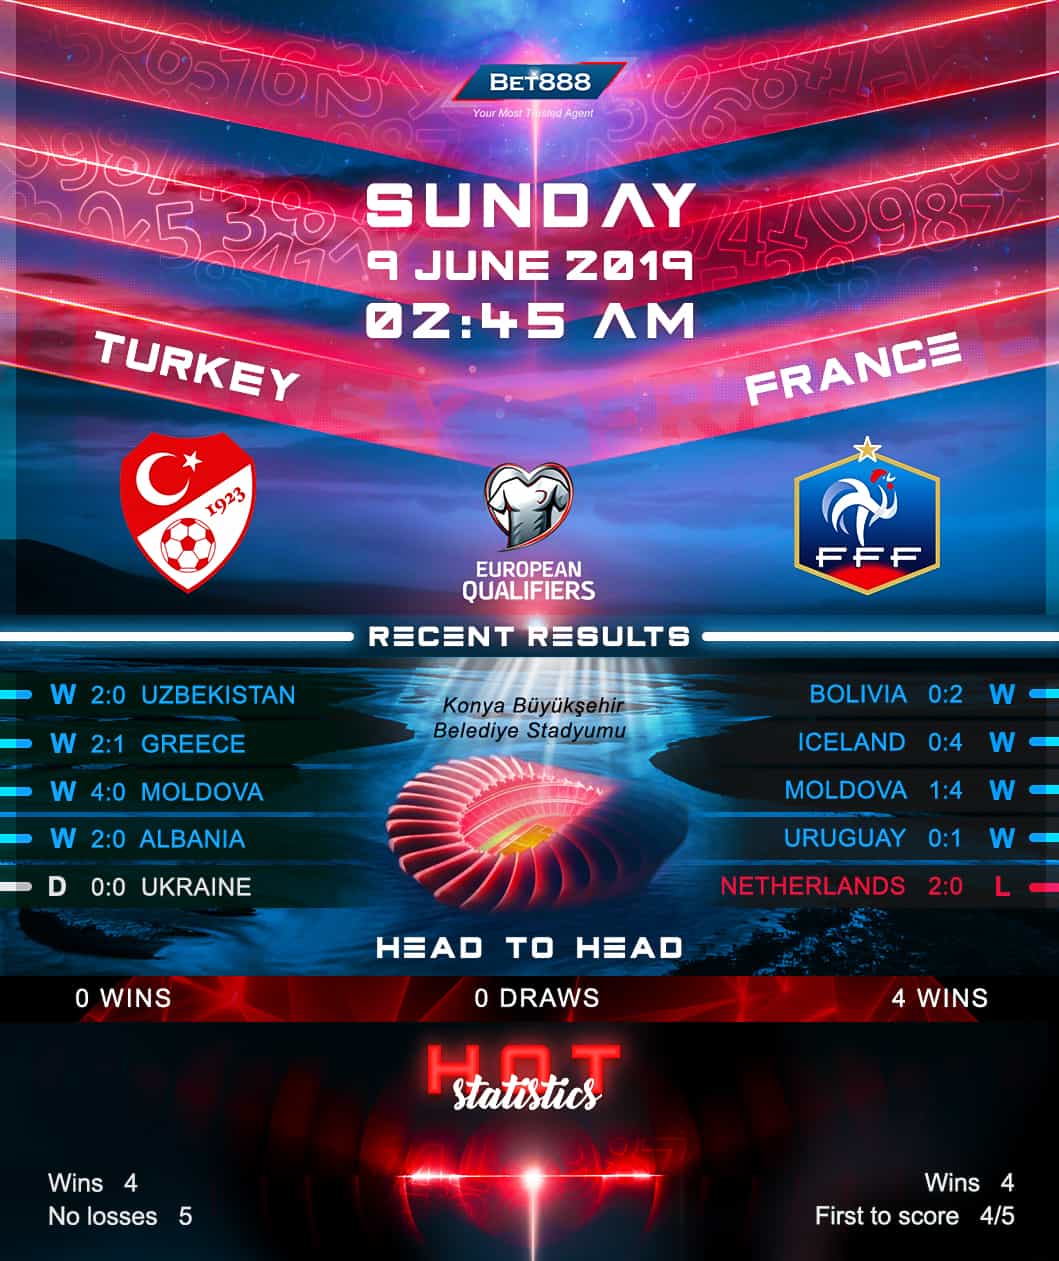 Turkey vs France﻿ 09/06/19